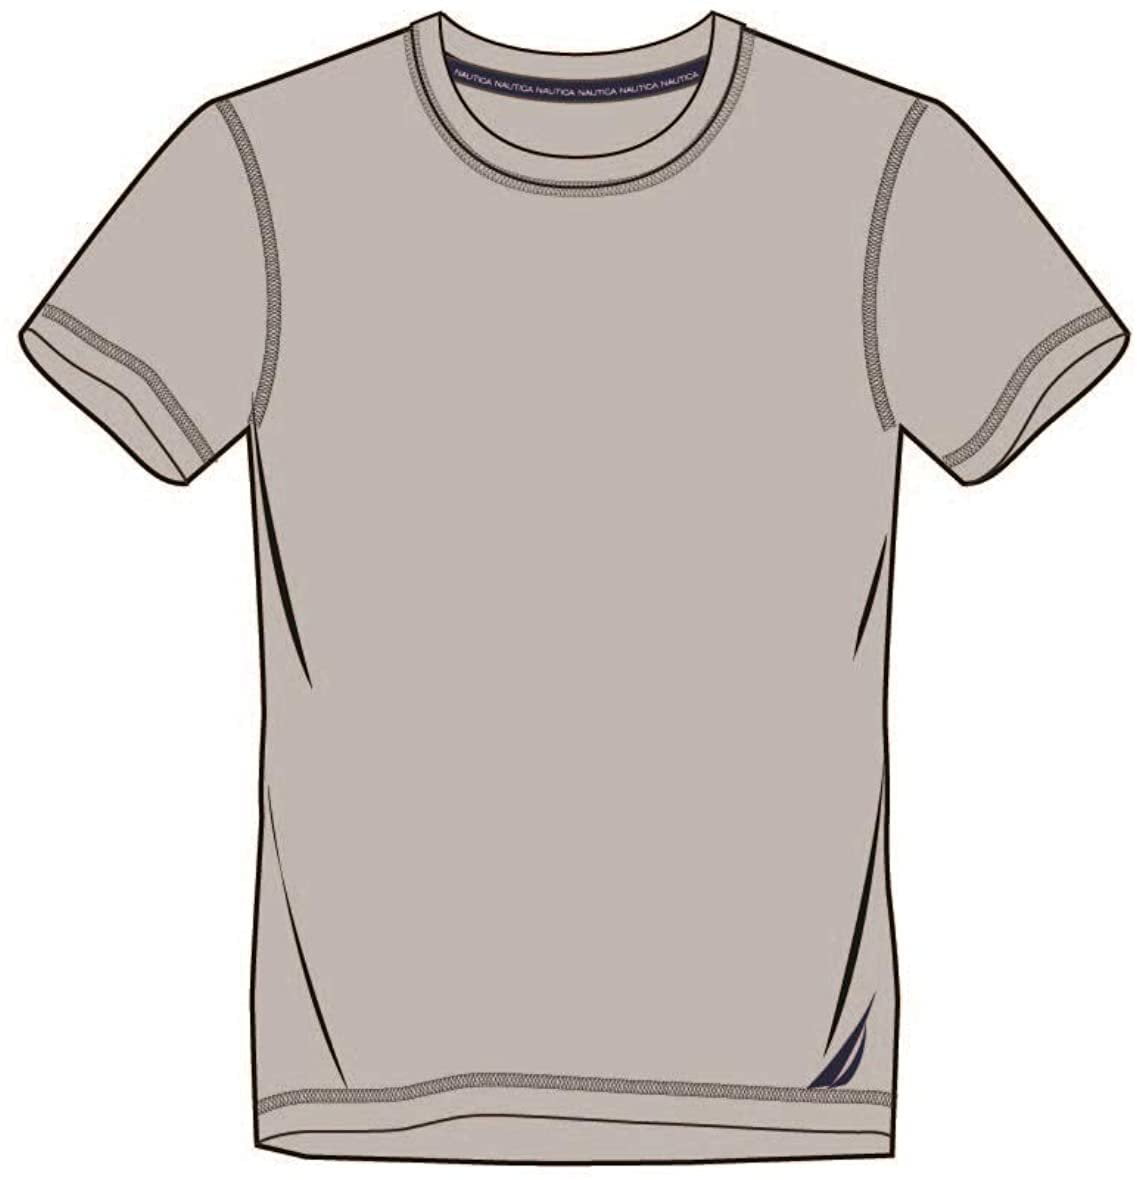 COOLOMG Women Compression Short Sleeve T-Shirts Baselayer Sports Workout Shirt 